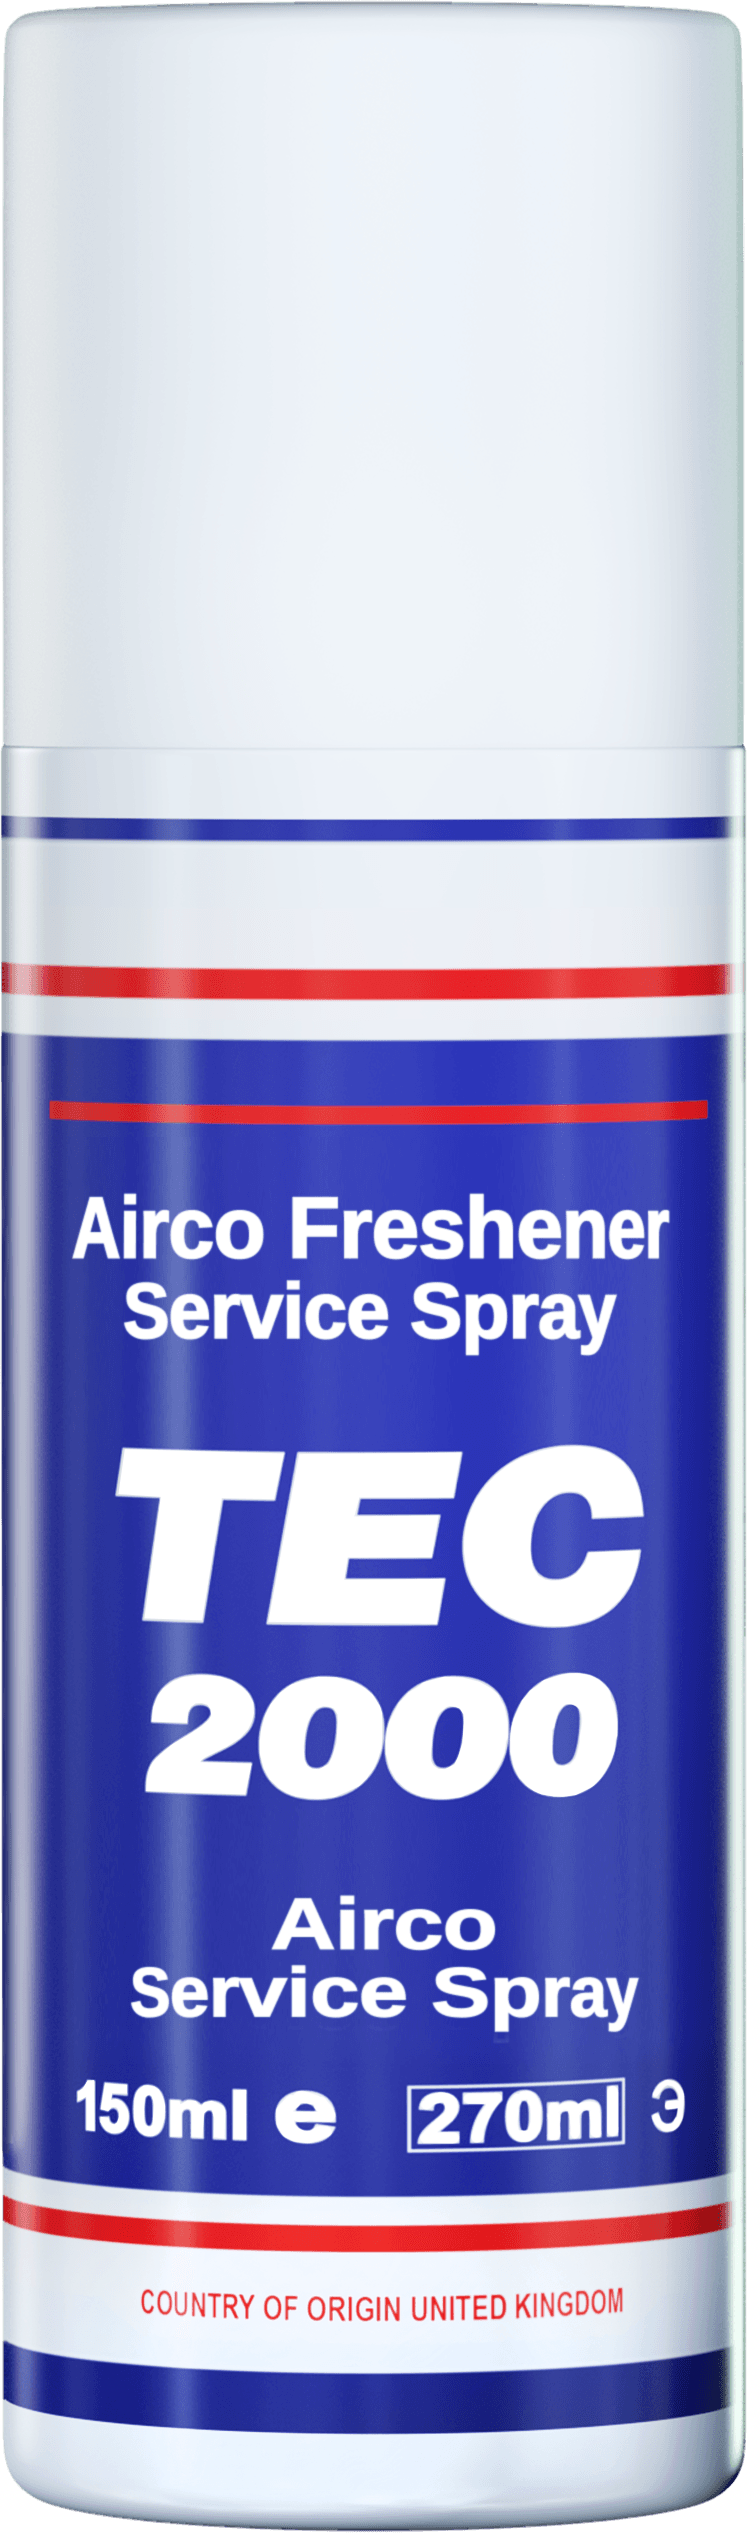 TEC 2000 Airco Fresher Service Spray product